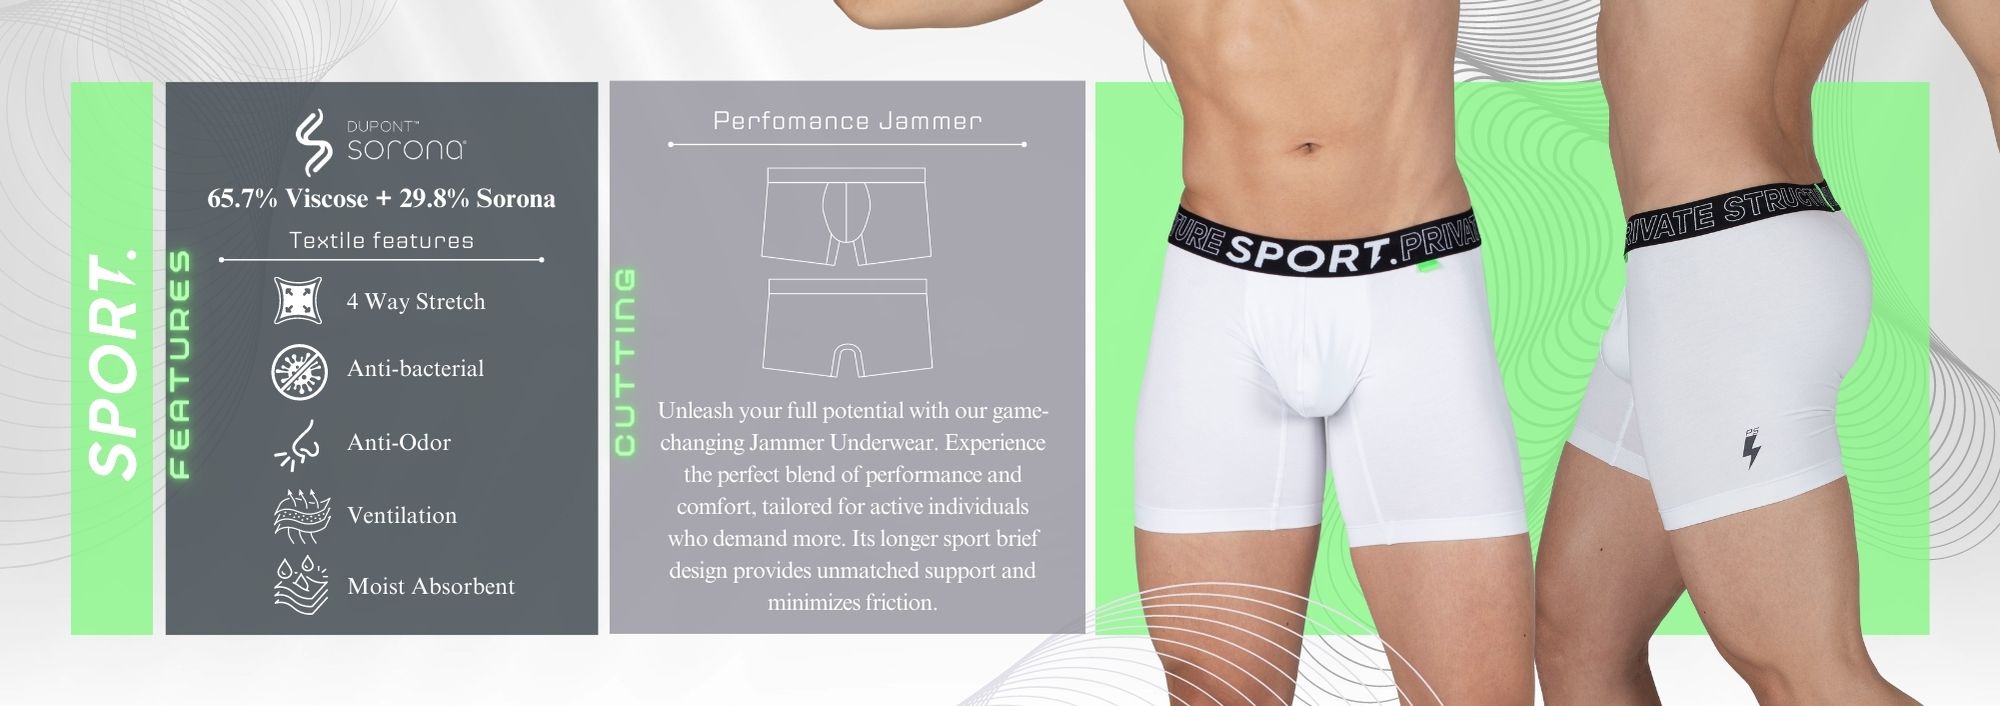 Private Structure Men Underwear PS Sport Collection